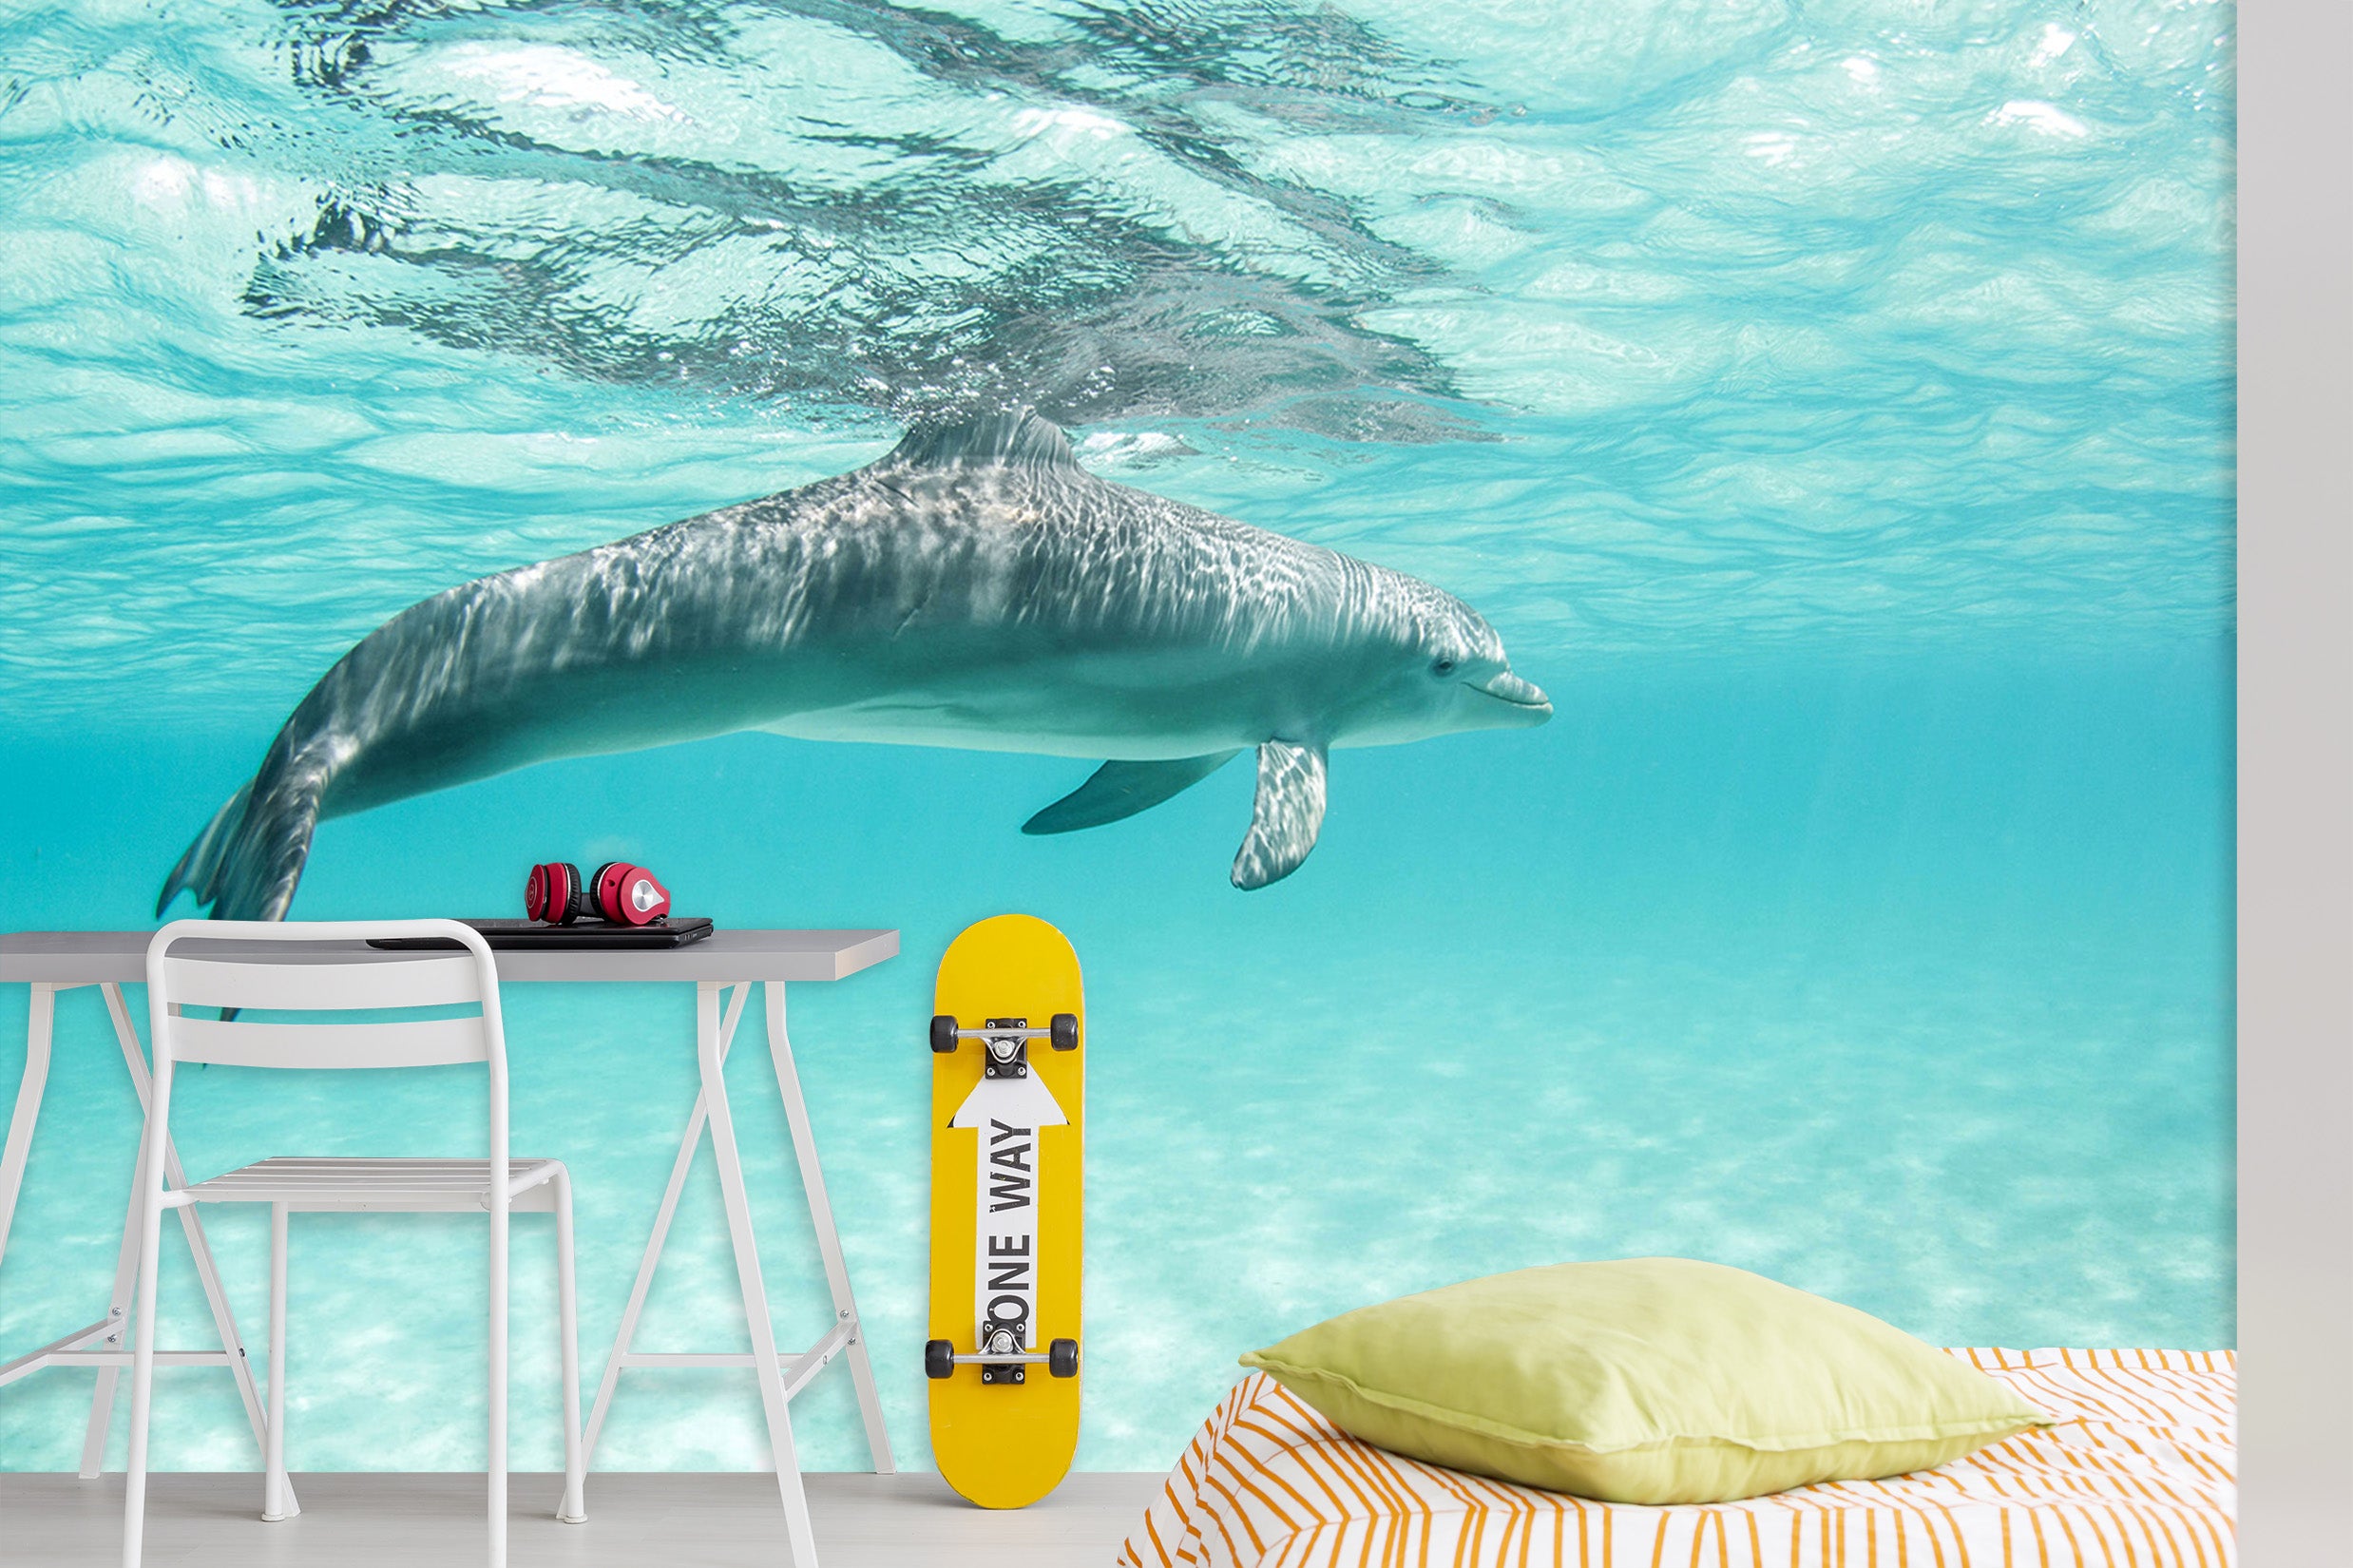 3D Dolphin Leisure 225 Wall Murals